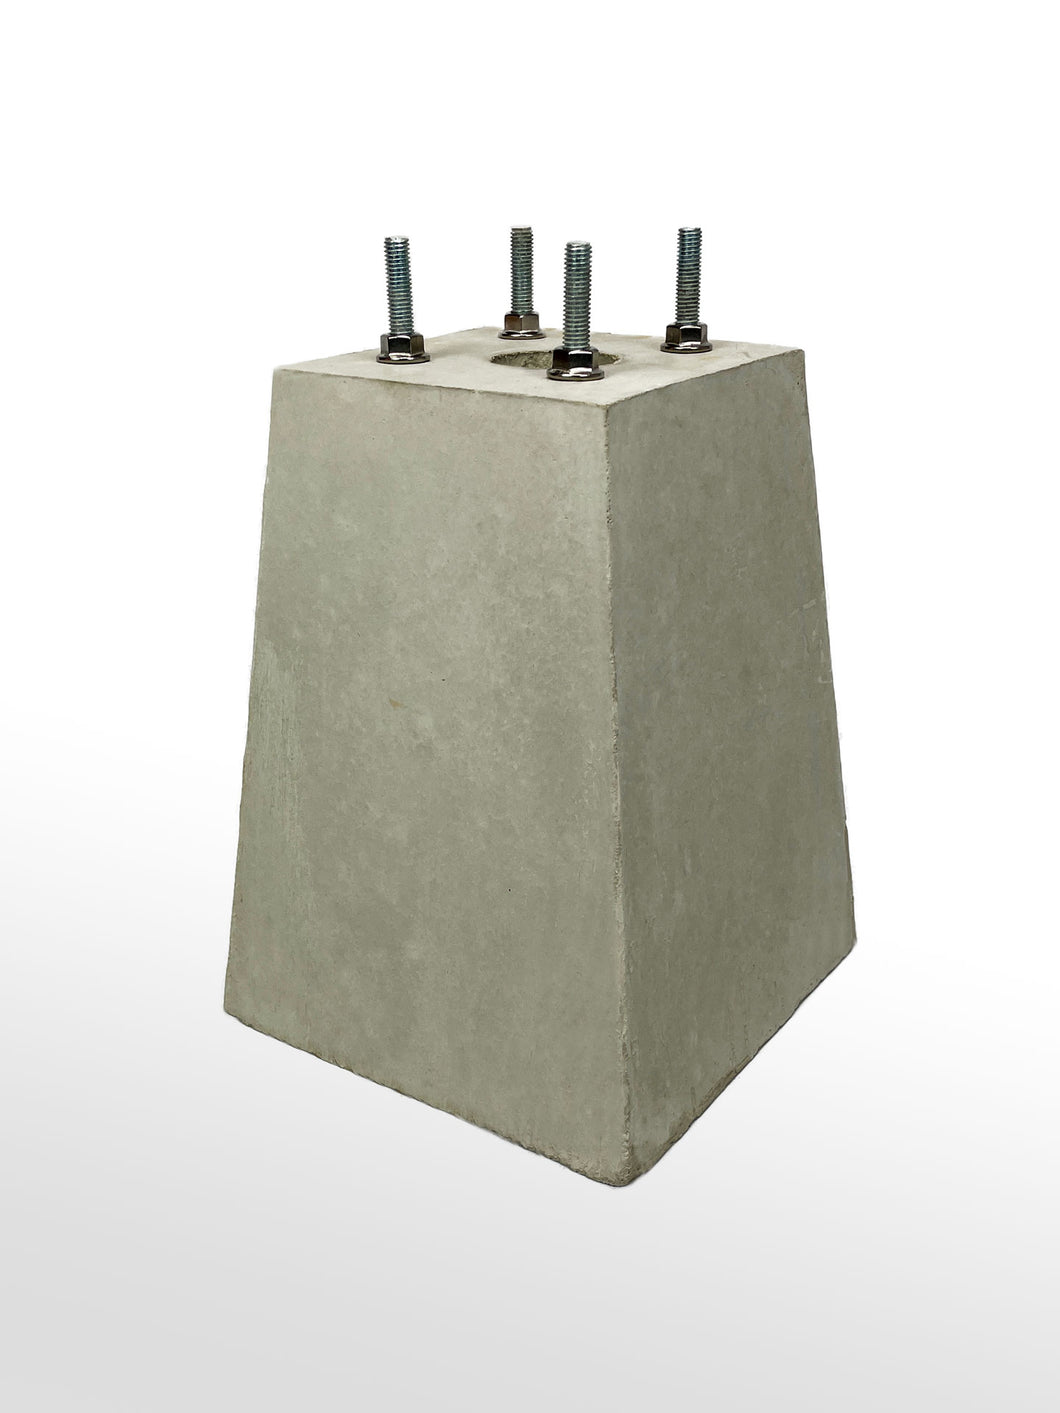 Concrete base for Ladeeda® pedestals